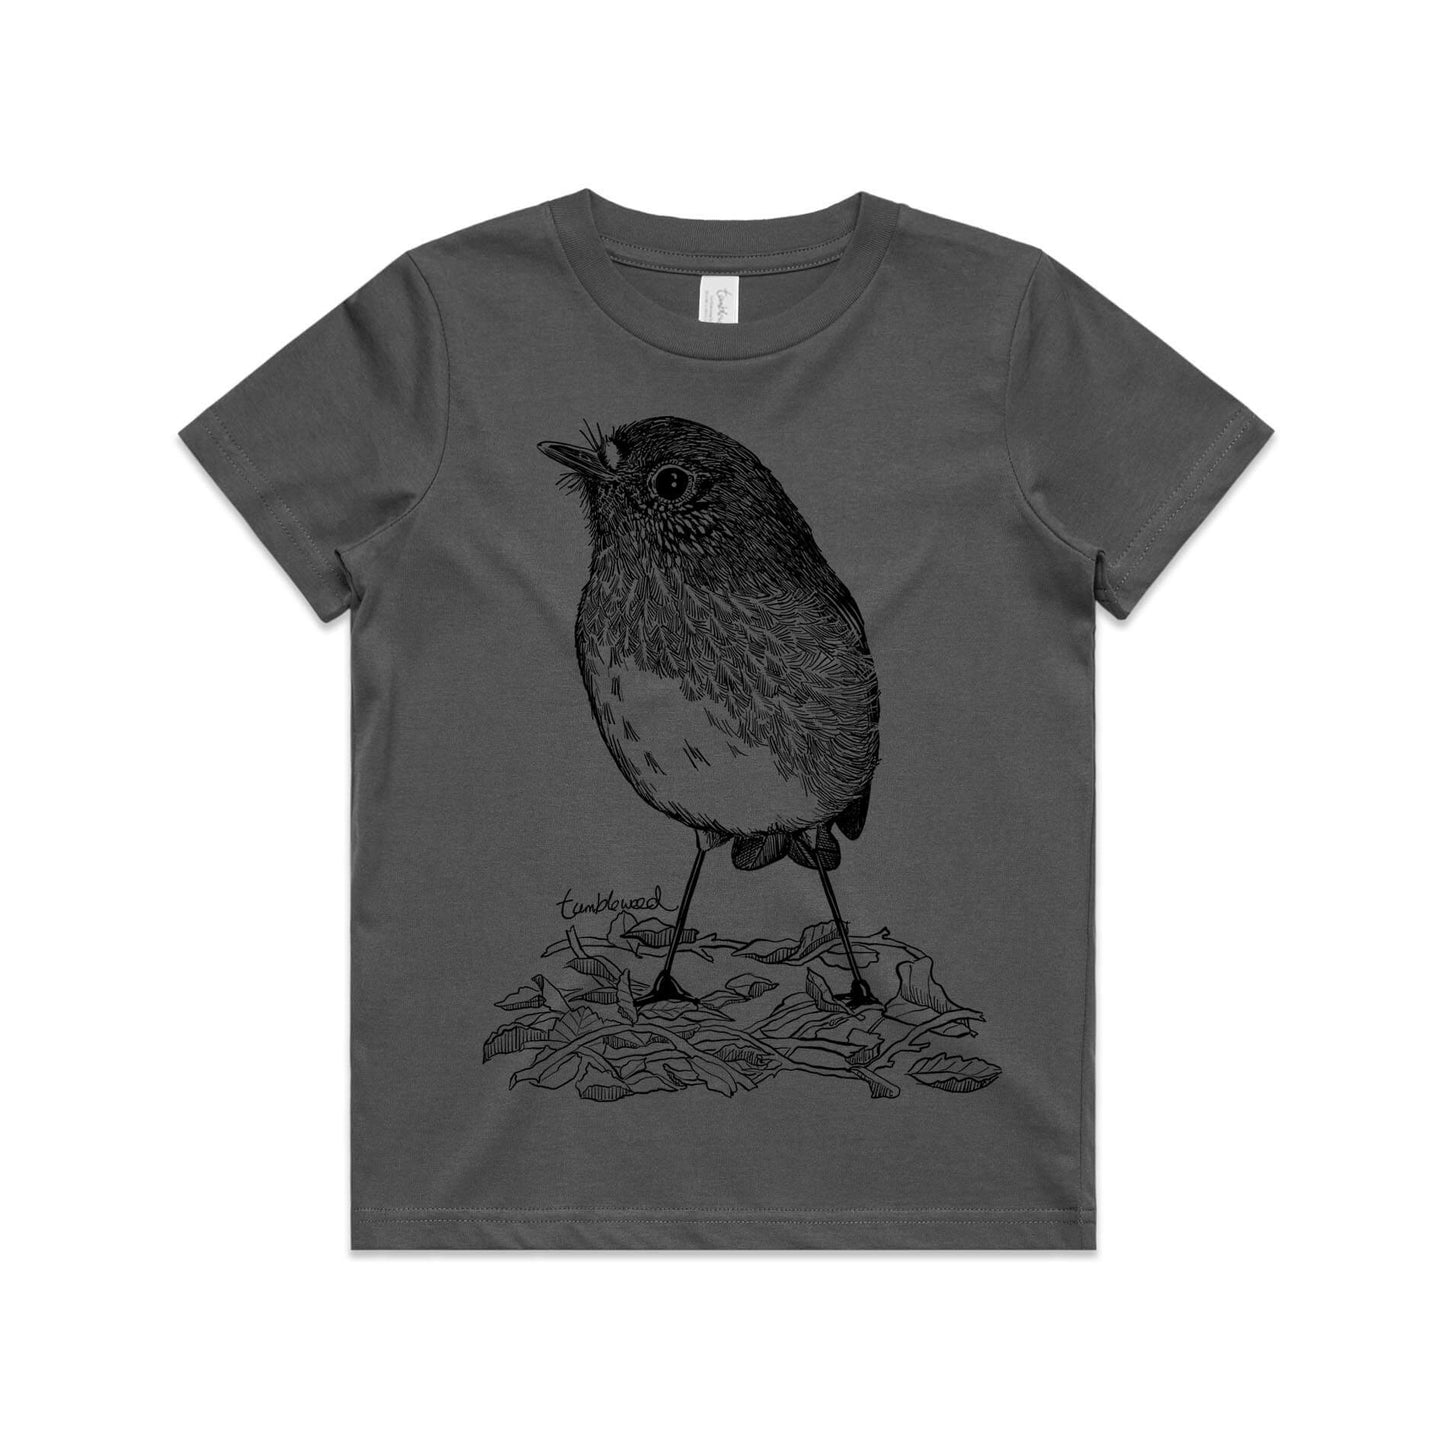 Charcoal, cotton kids' t-shirt with screen printed North Island robin/toutouwai design.